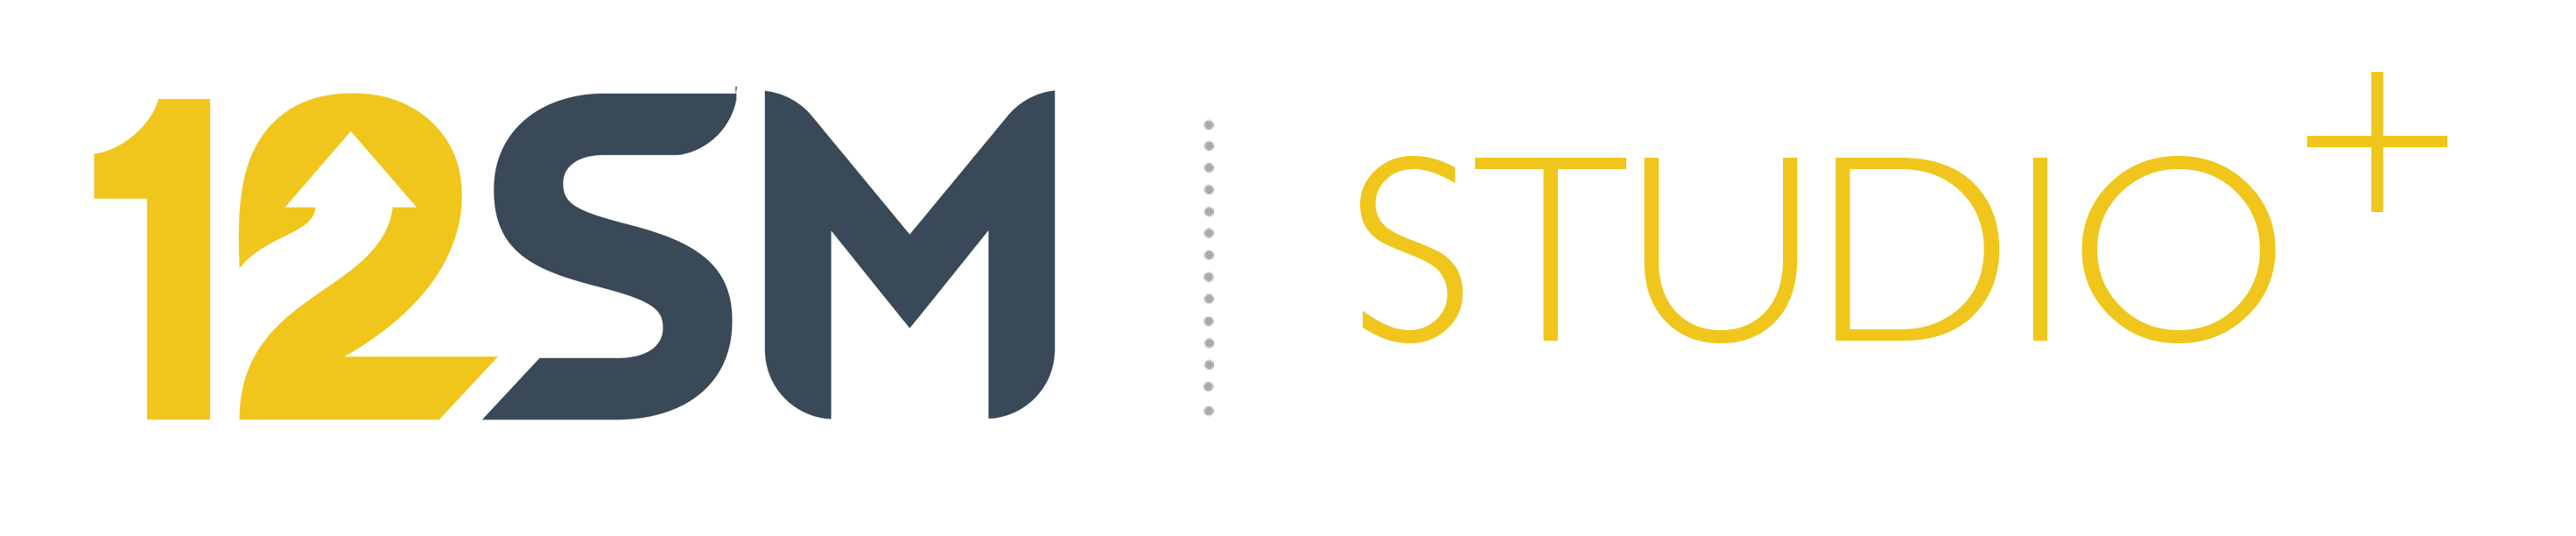 12sm-studio-logo-07